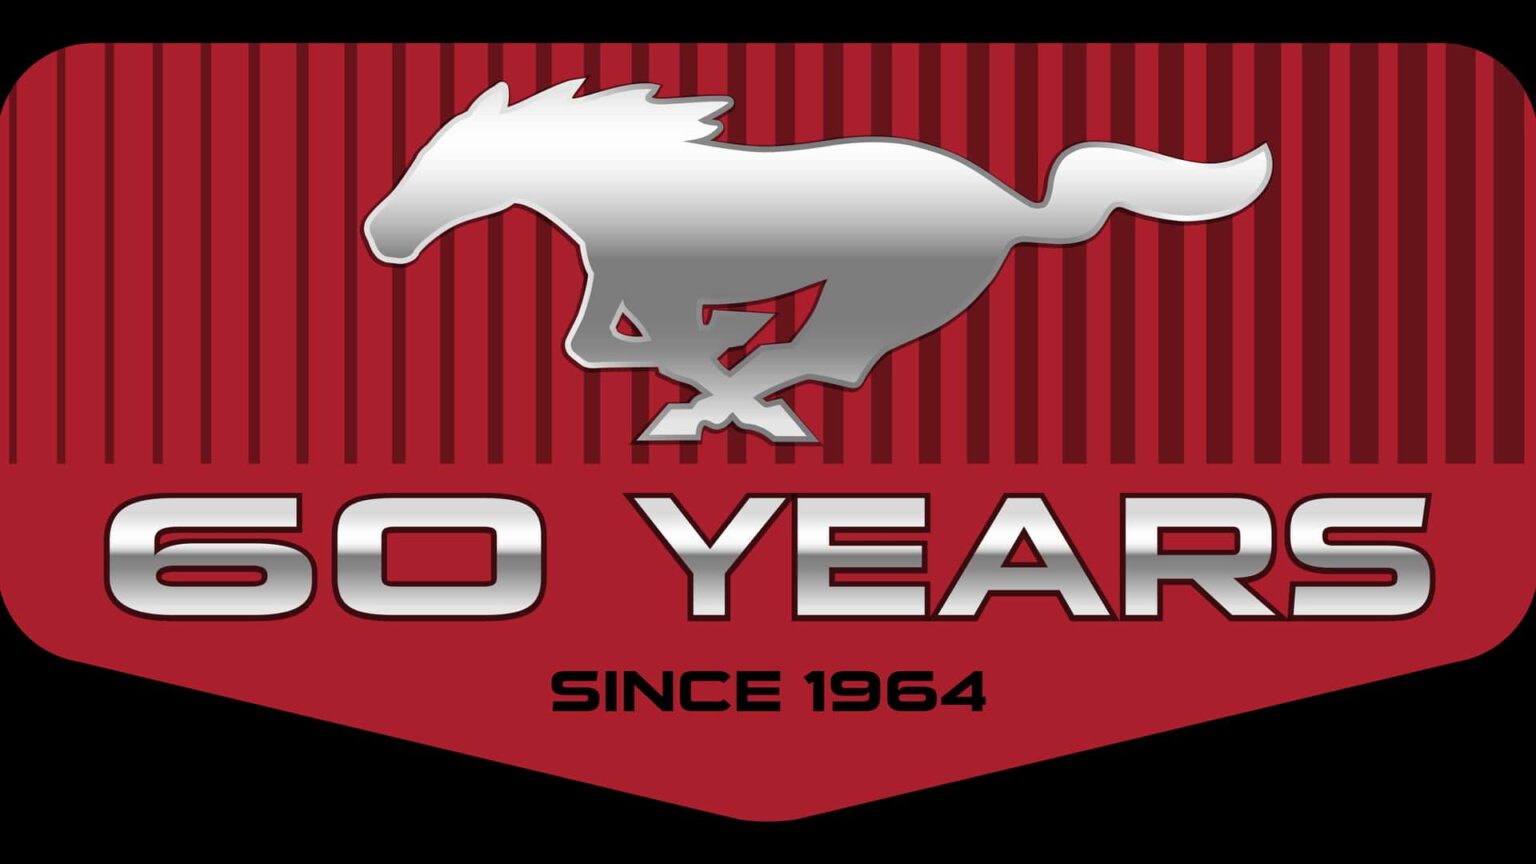 Mustang 60 Aniversario